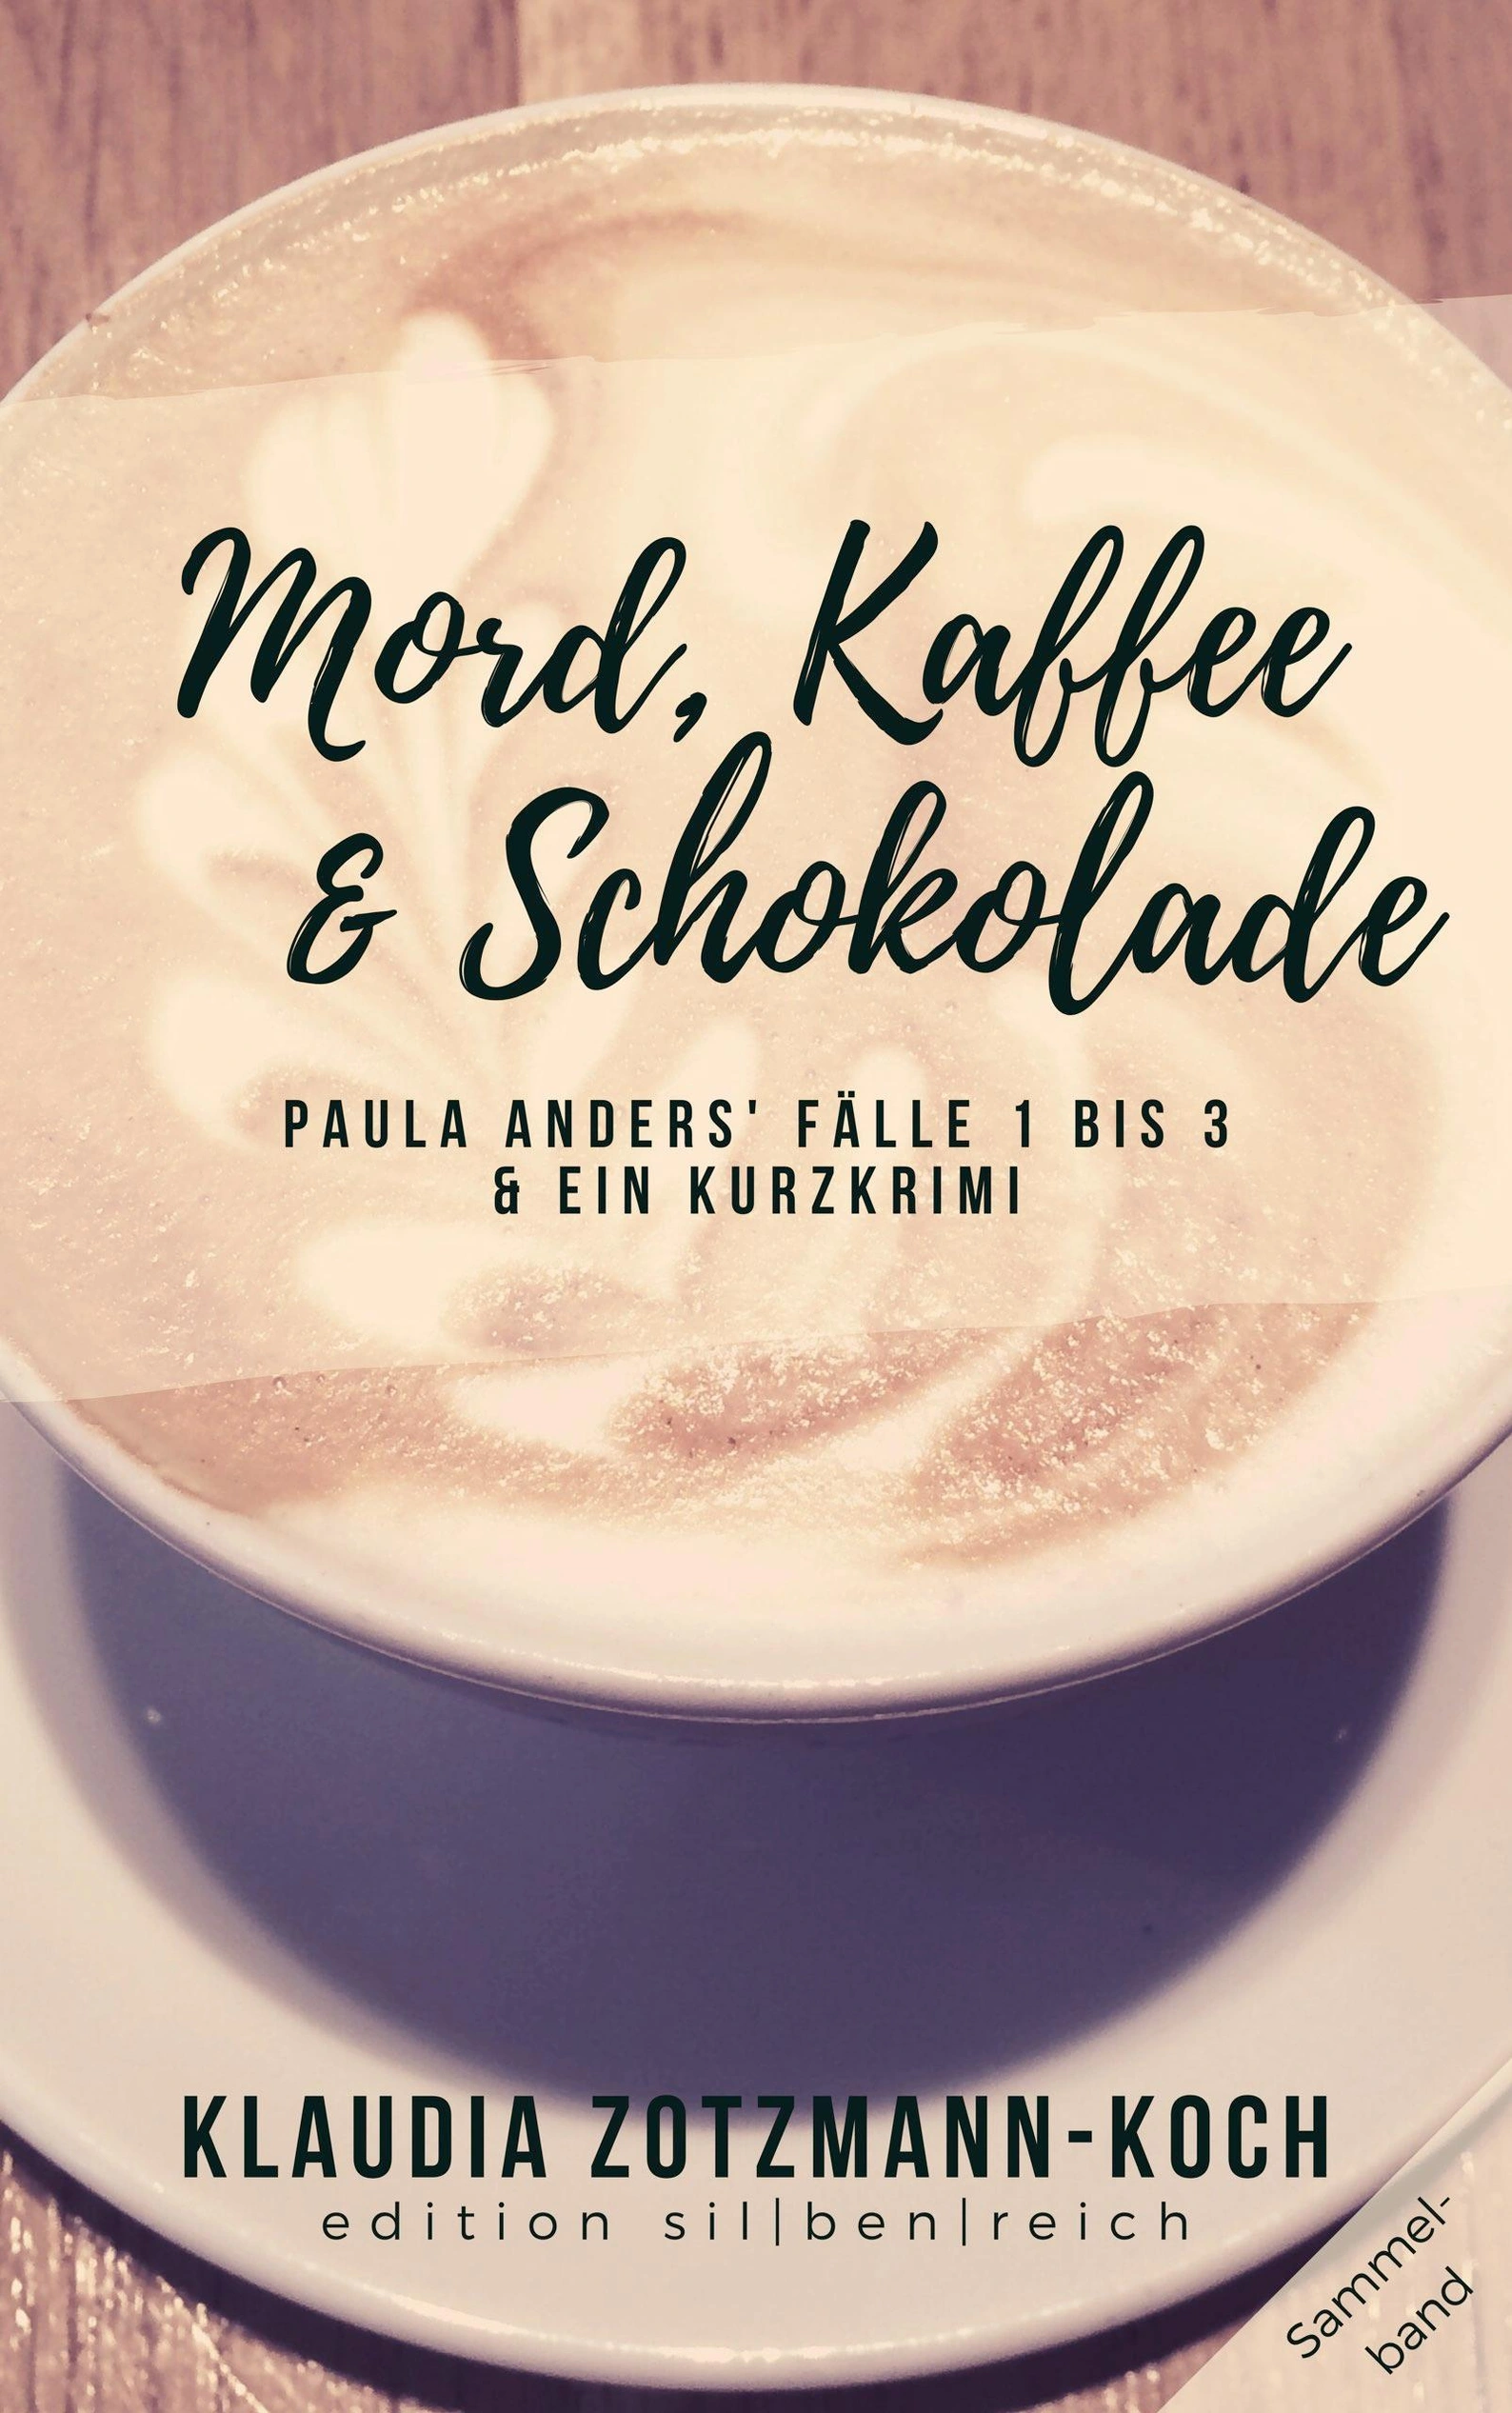 Klaudia Zotzmann-Koch: Mord, Kaffee & Schokolade: Paula Anders' Fälle 1 bis 3 (EBook, deutsch language, edition Sil|ben|reich)